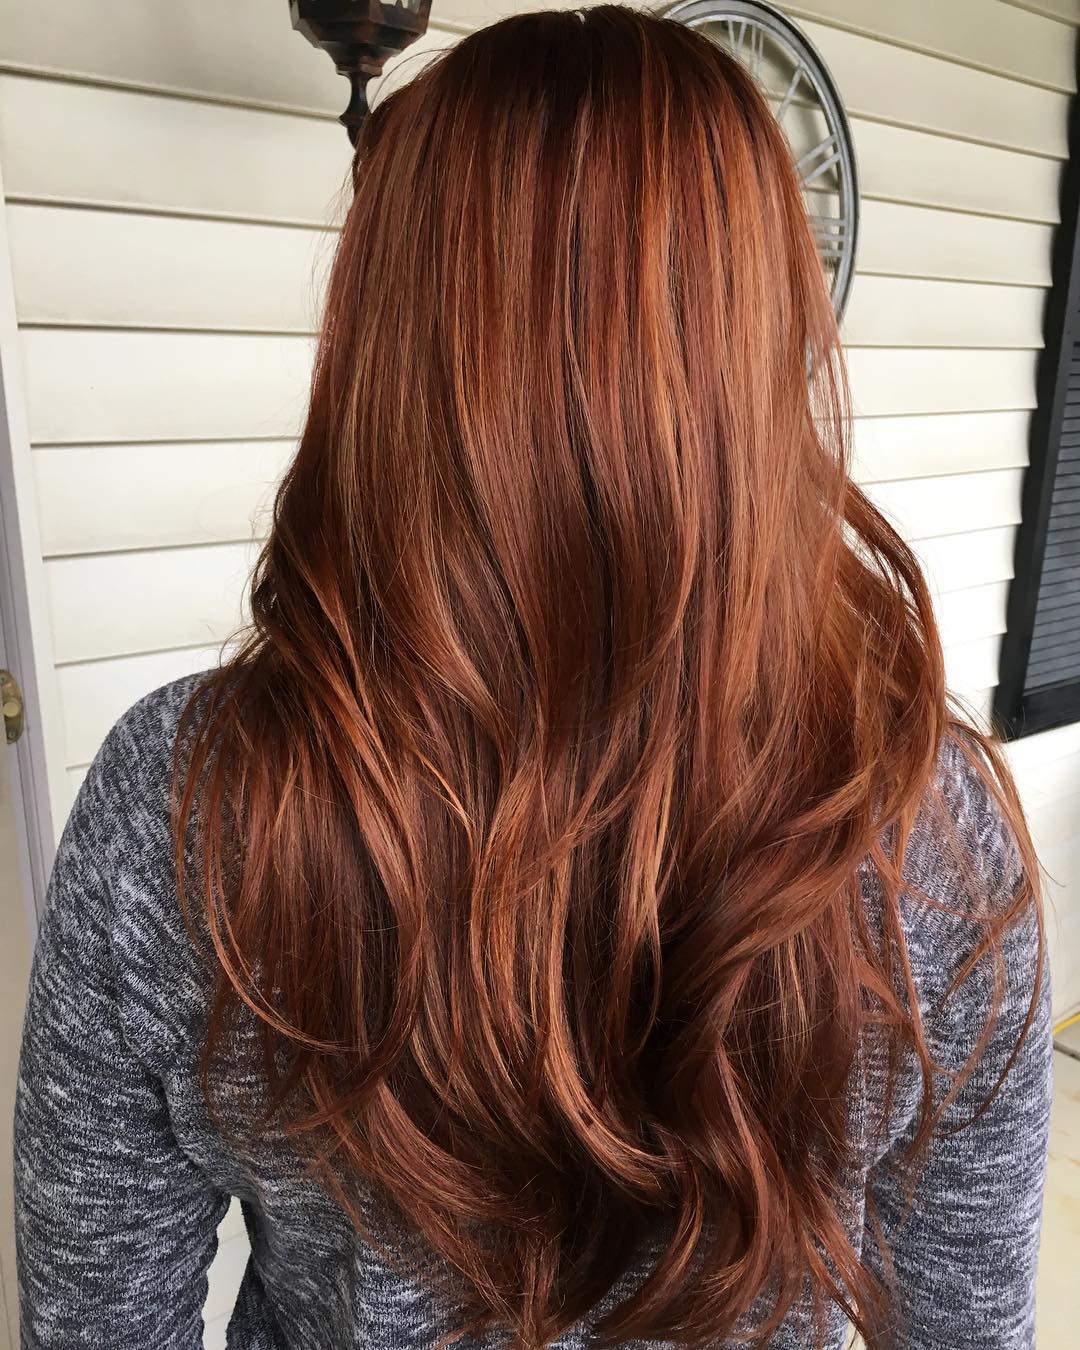 red-brown hair